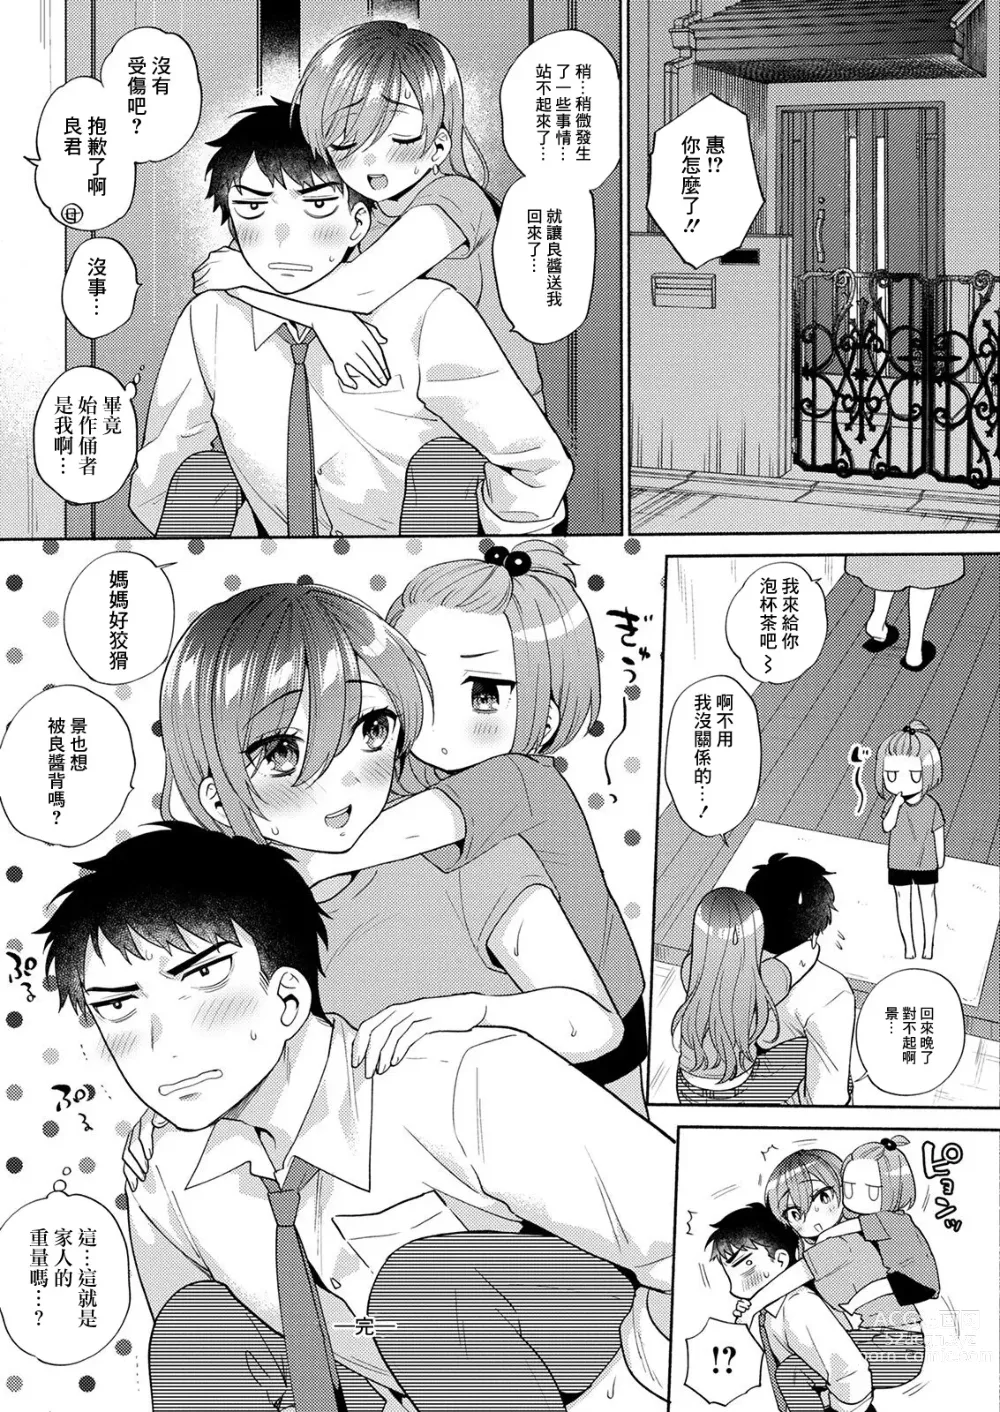 Page 20 of manga Overskip